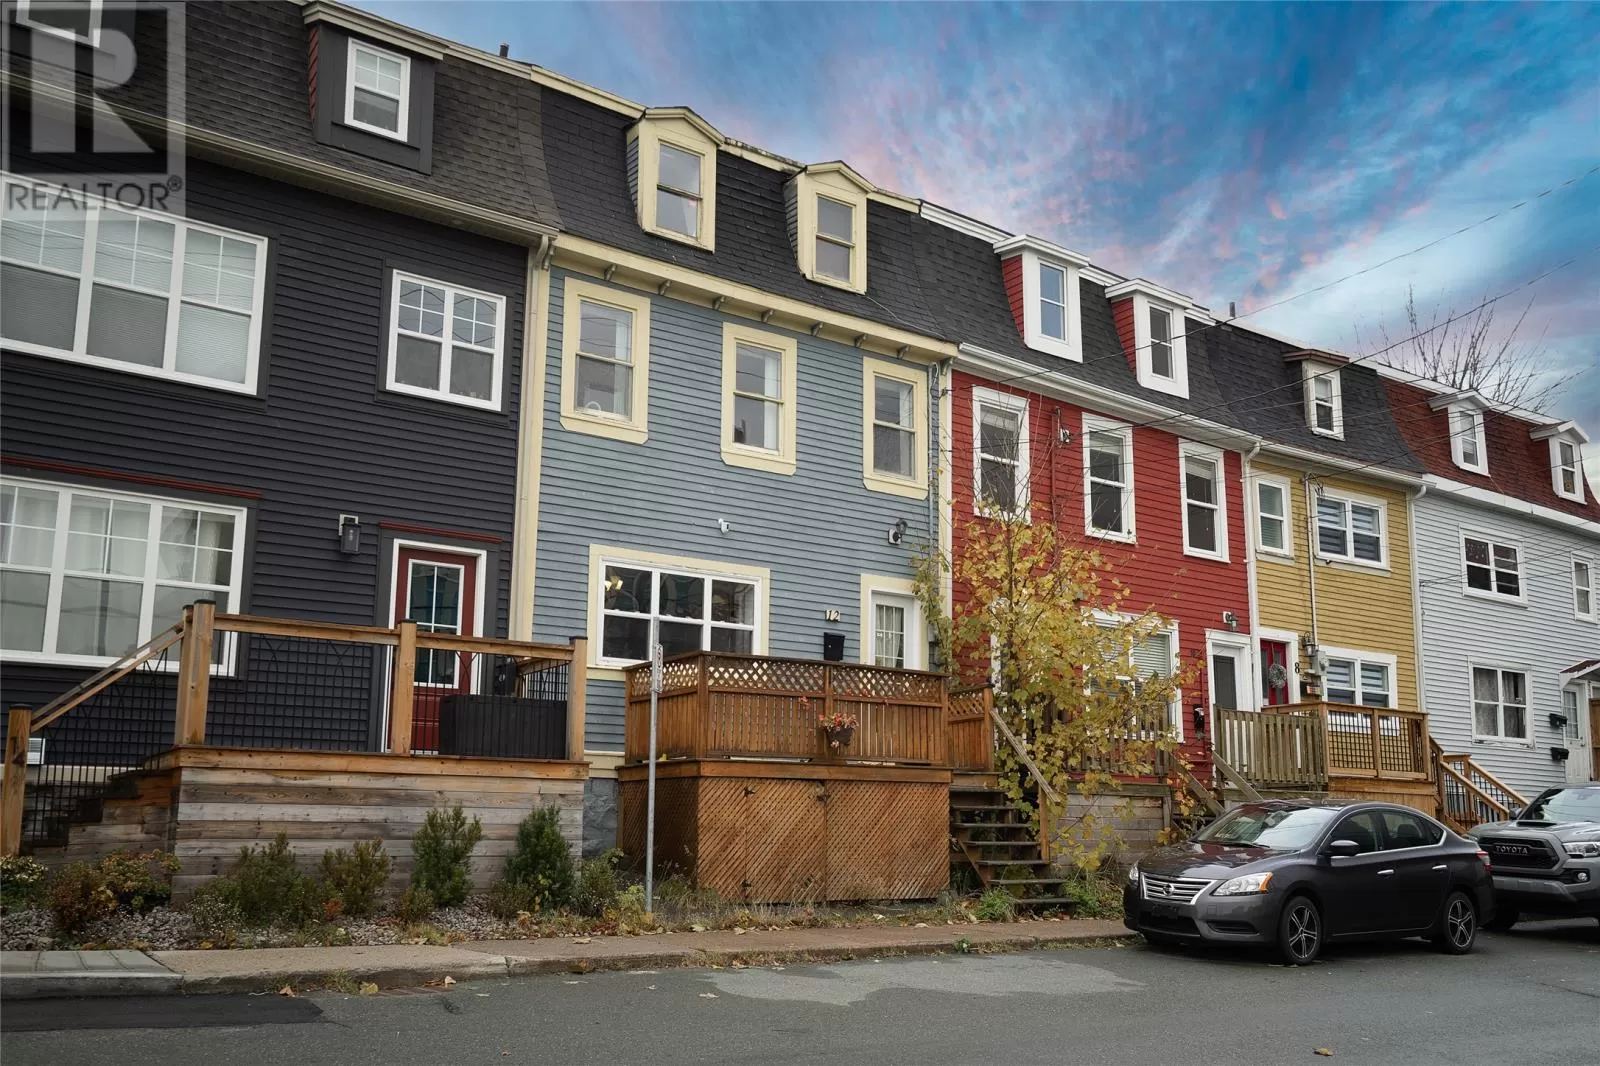 House for rent: 12 John Street, St. John's, Newfoundland & Labrador A1C 1W6